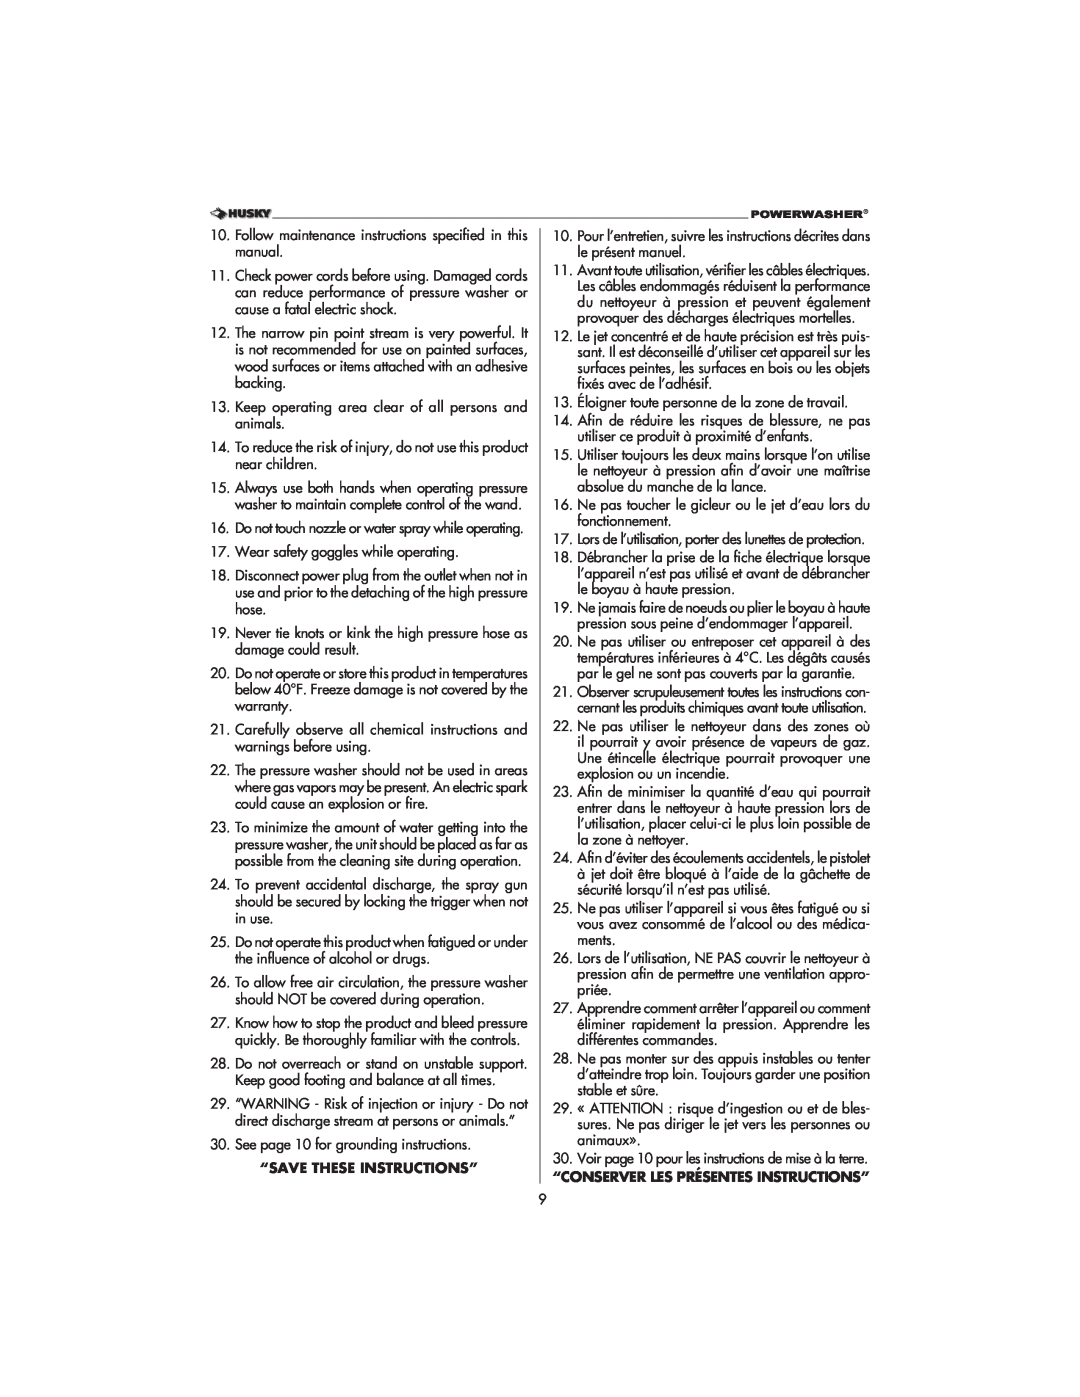 Husky 1800 CA manual “Save These Instructions”, “Conserver Les Présentes Instructions” 